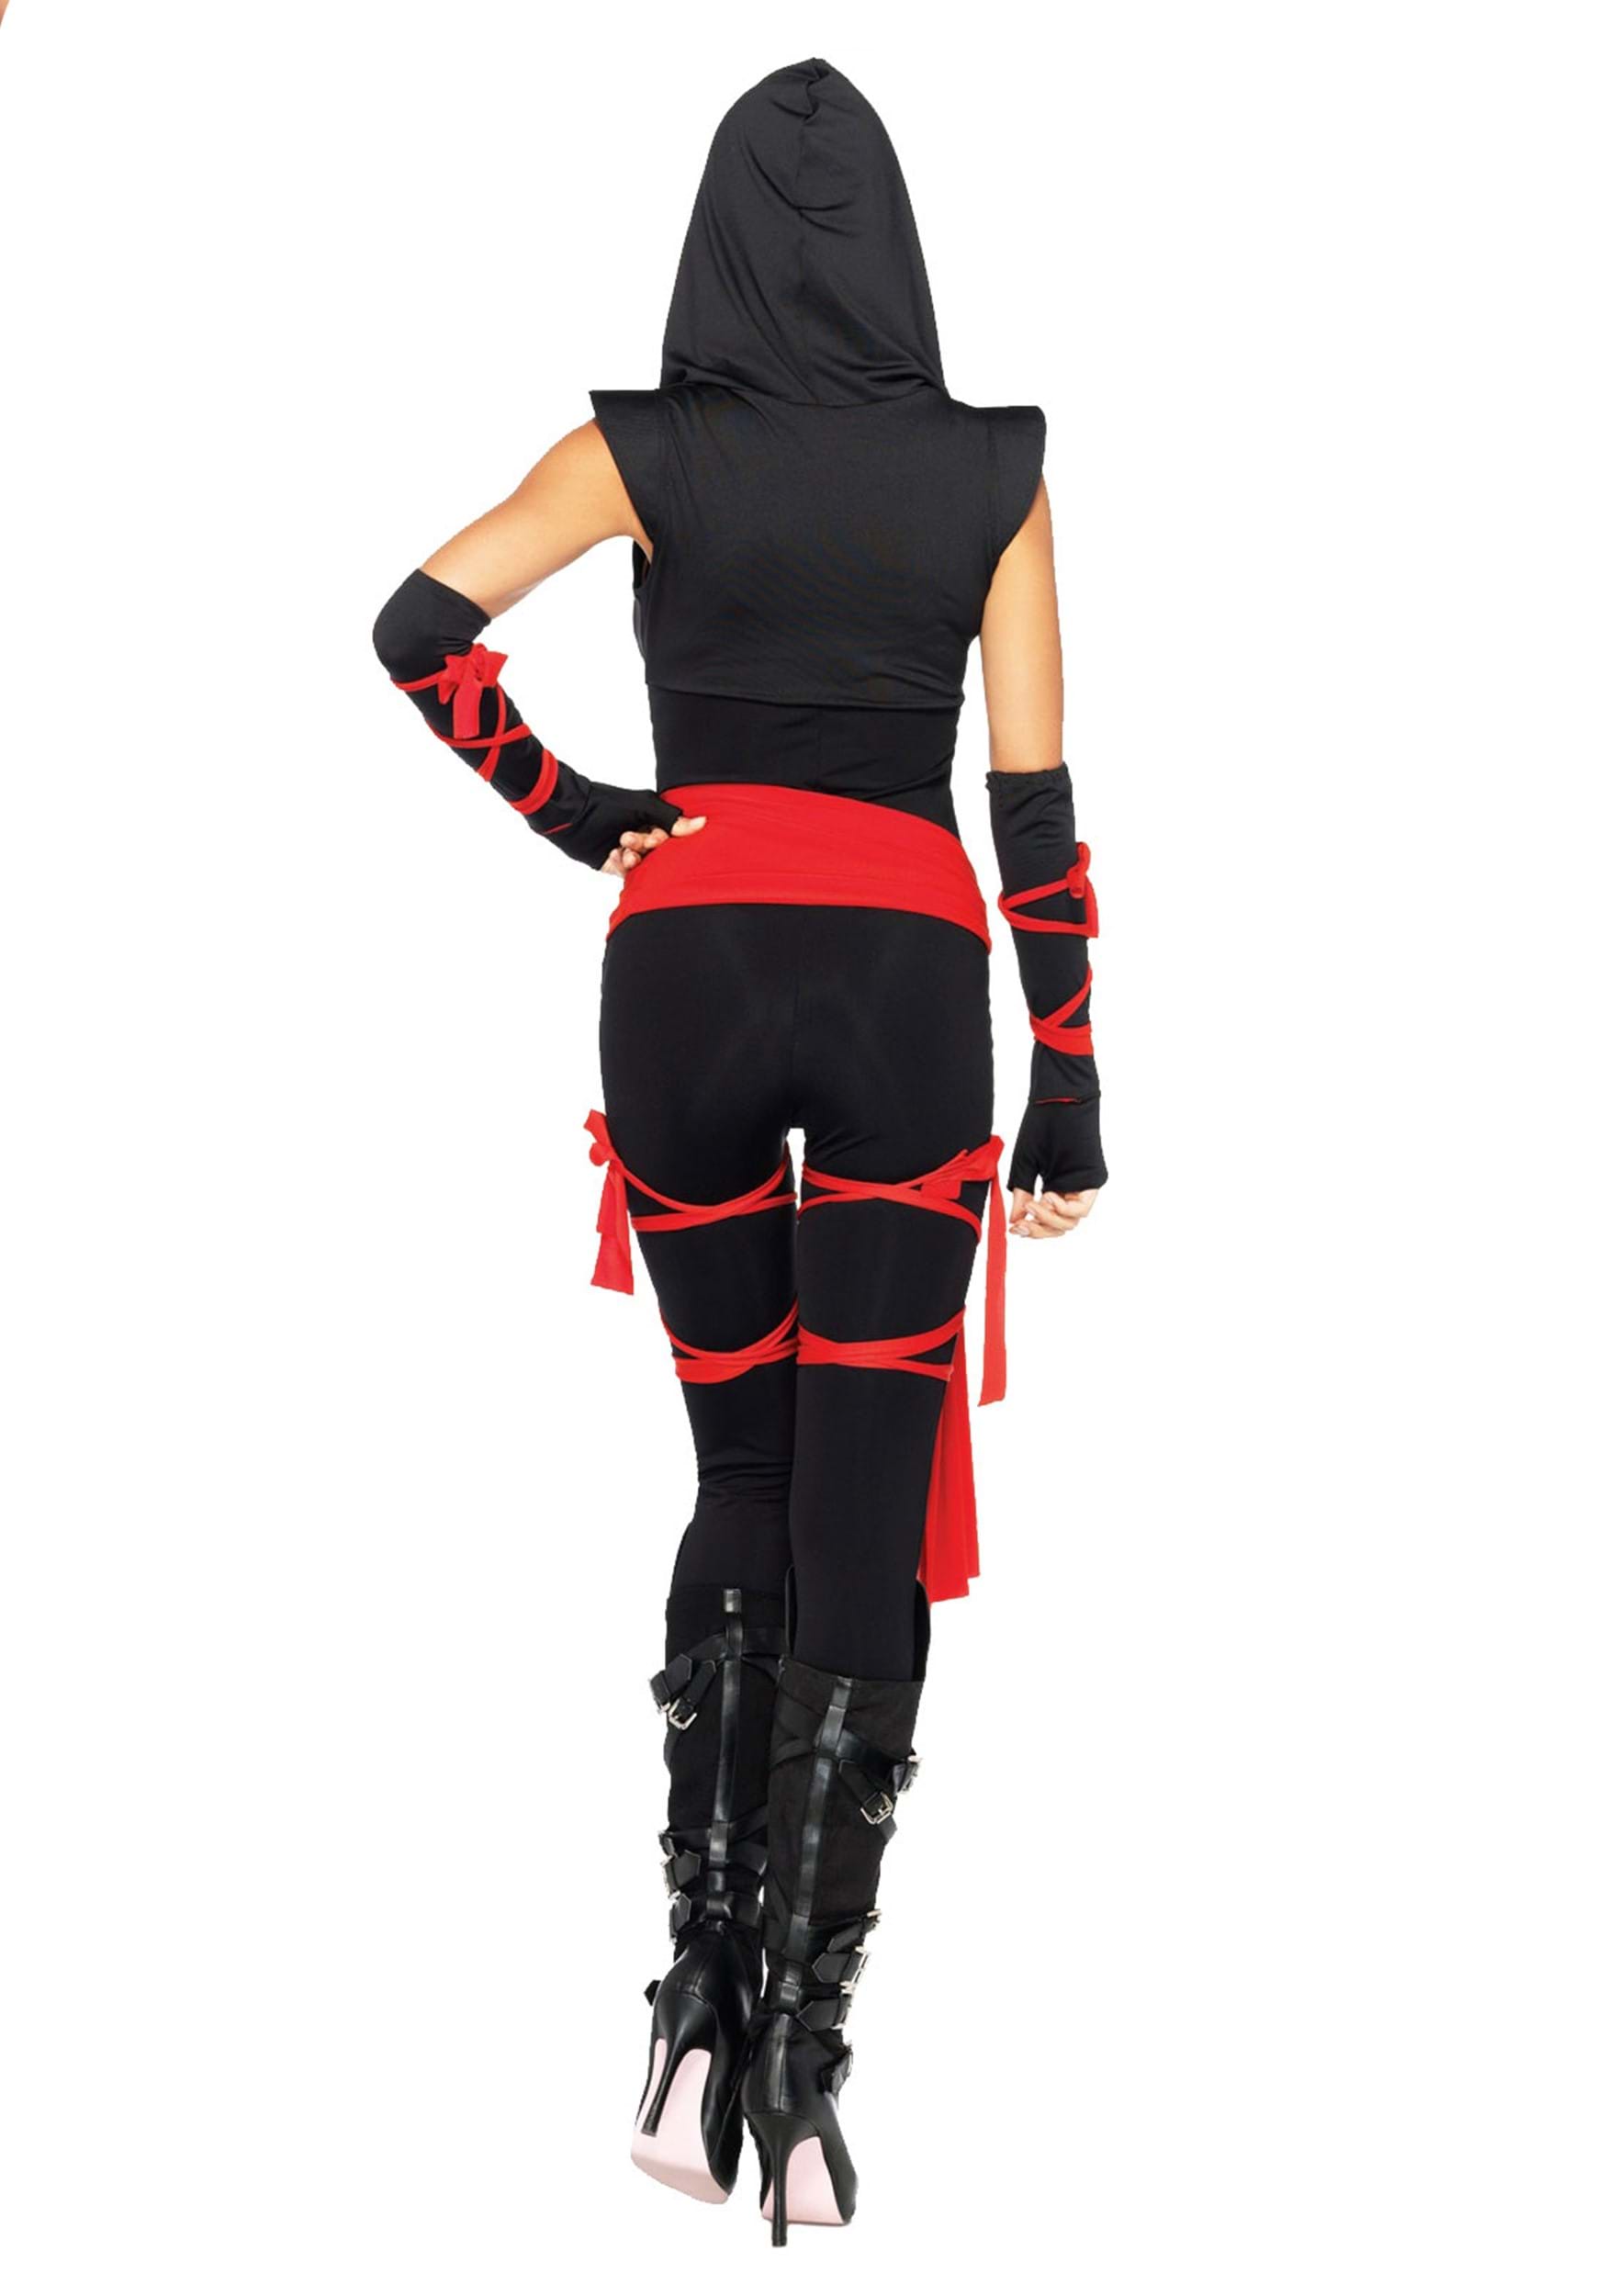 Deadly Ninja Costume, Womens Ninja Costume, Black Ninja Costume 